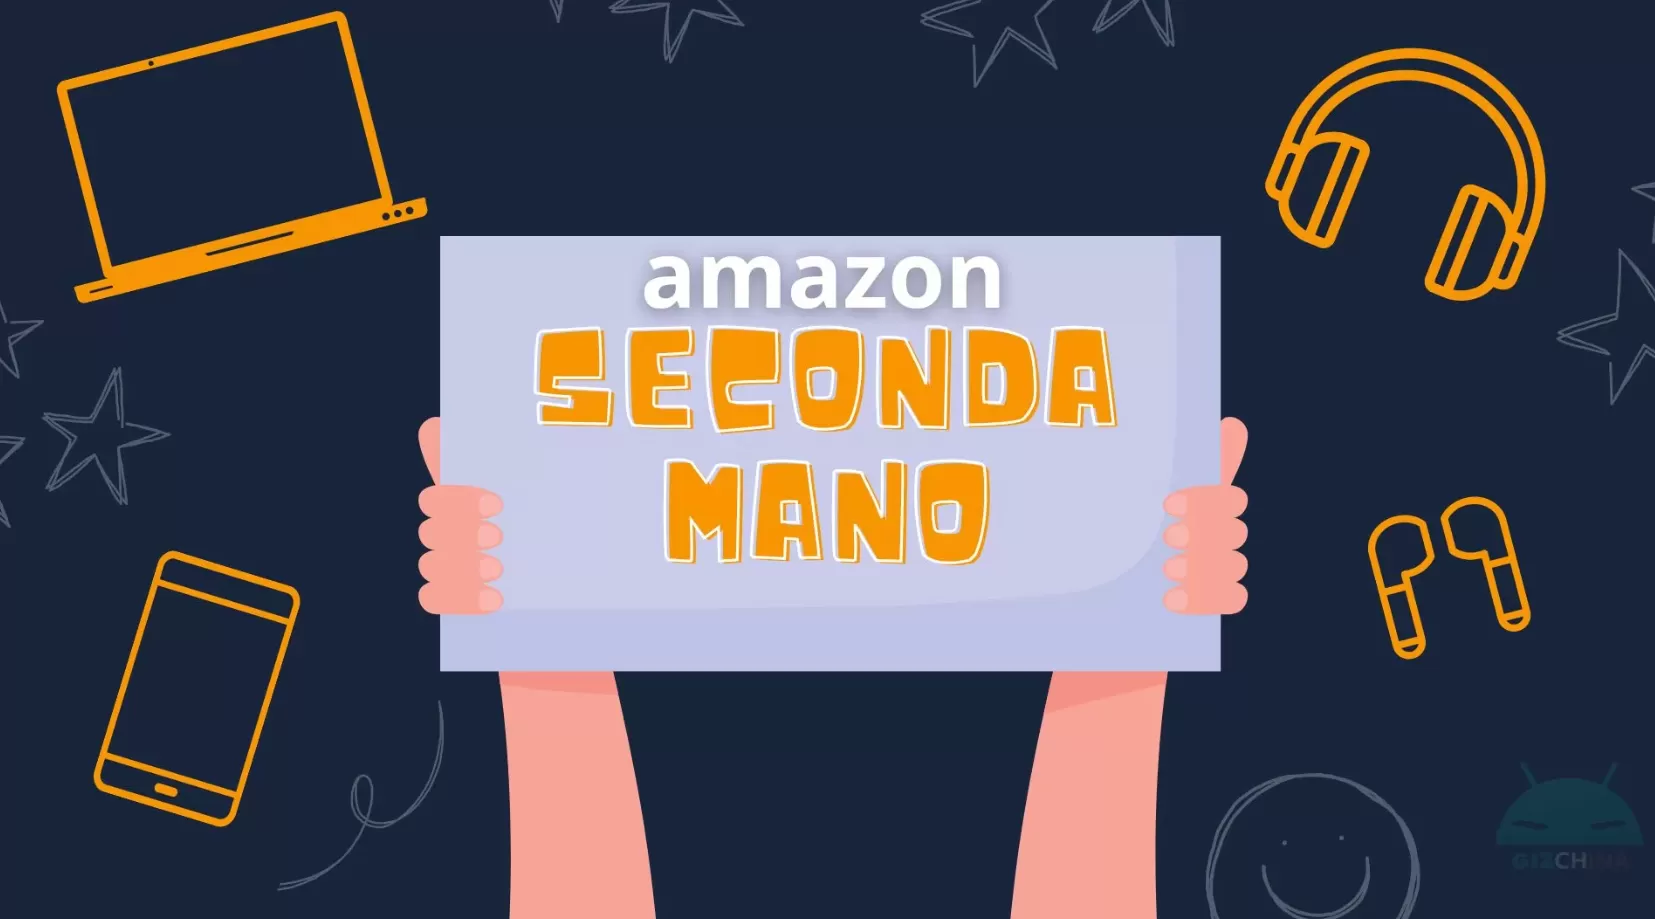 Amazon seconda mano